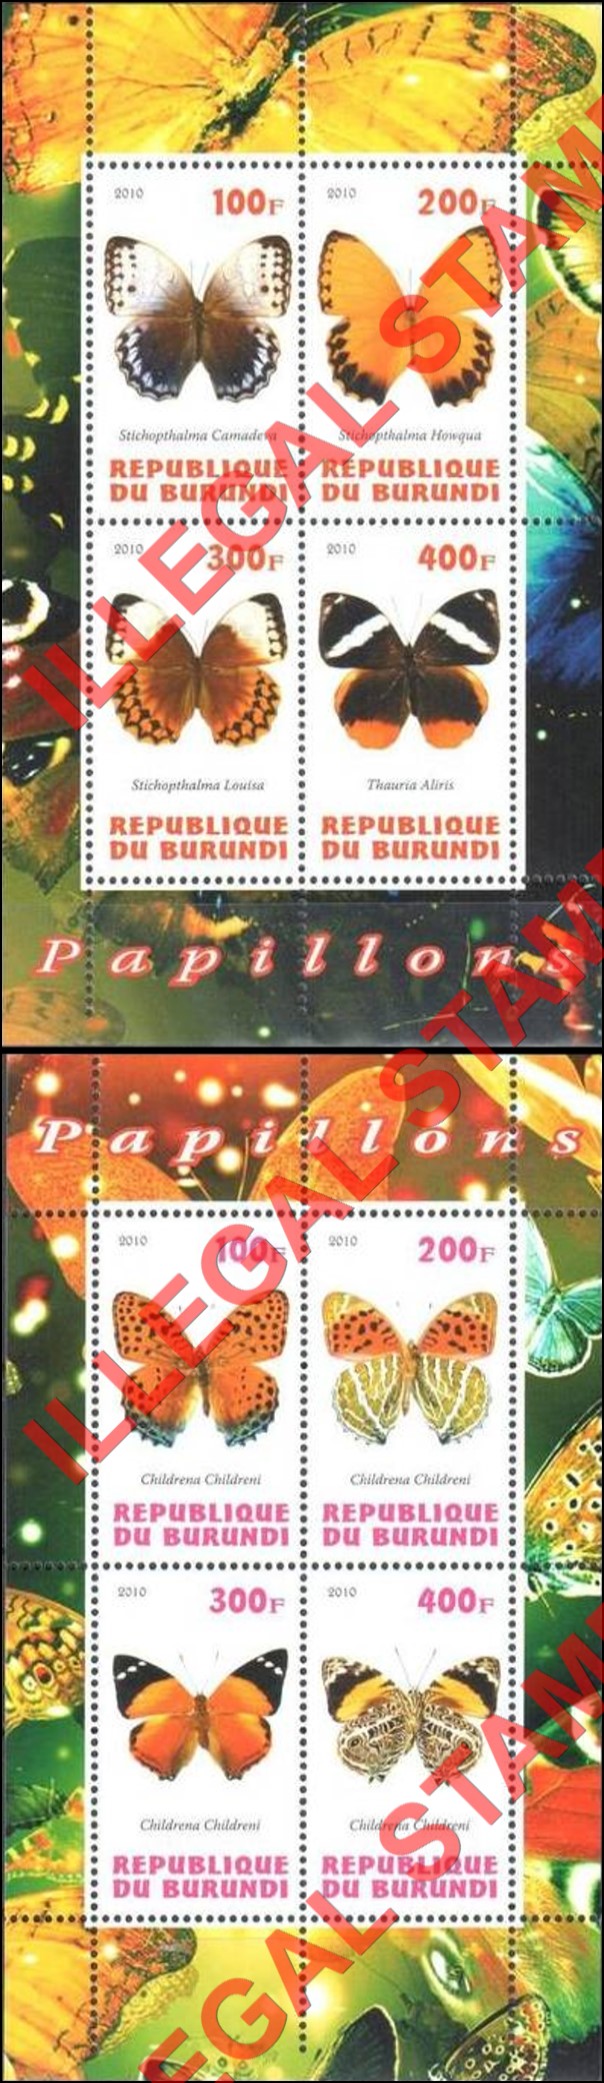 Burundi 2010 Butterflies Counterfeit Illegal Stamp Souvenir Sheets of 4